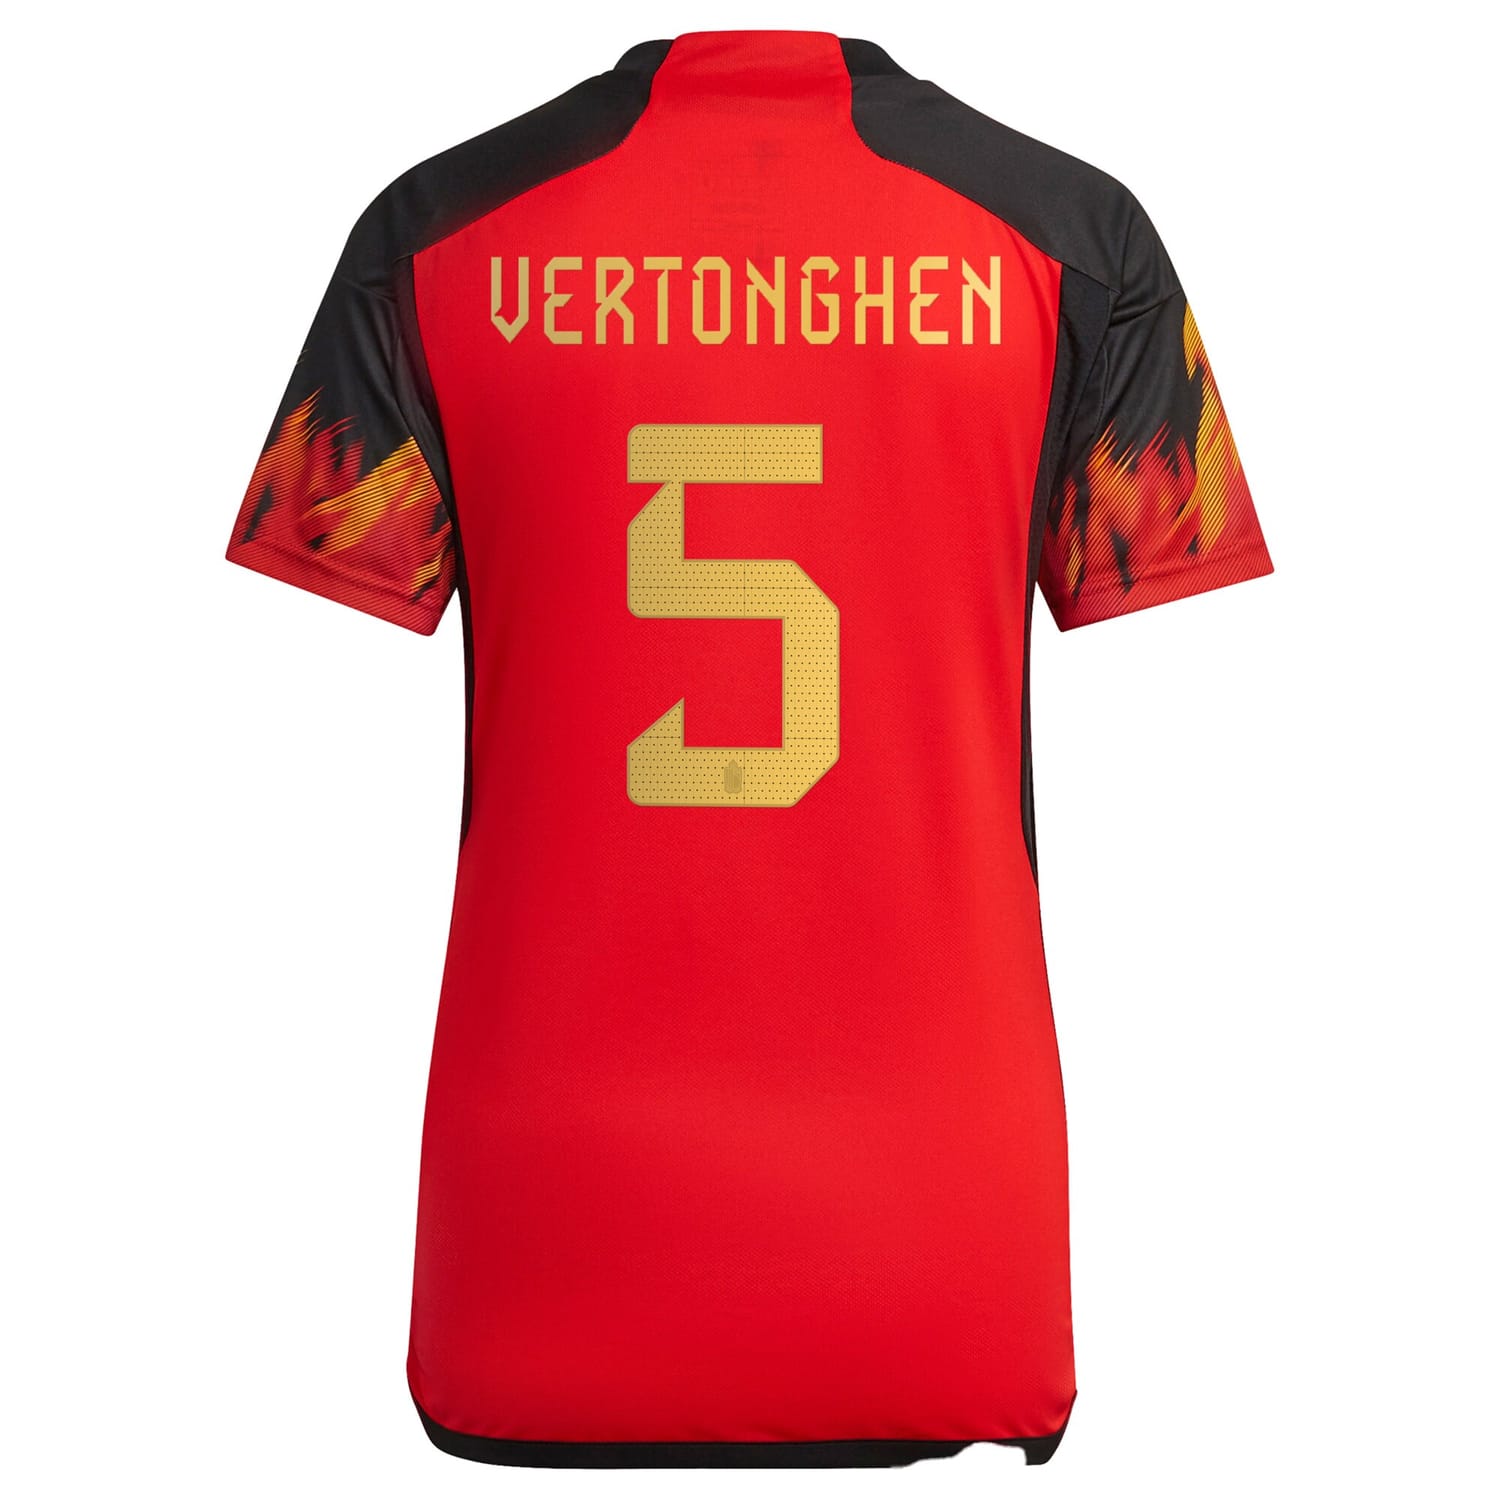 Belgium National Team Home Jersey Shirt 2022 player Jan Vertonghen 5 printing for Women